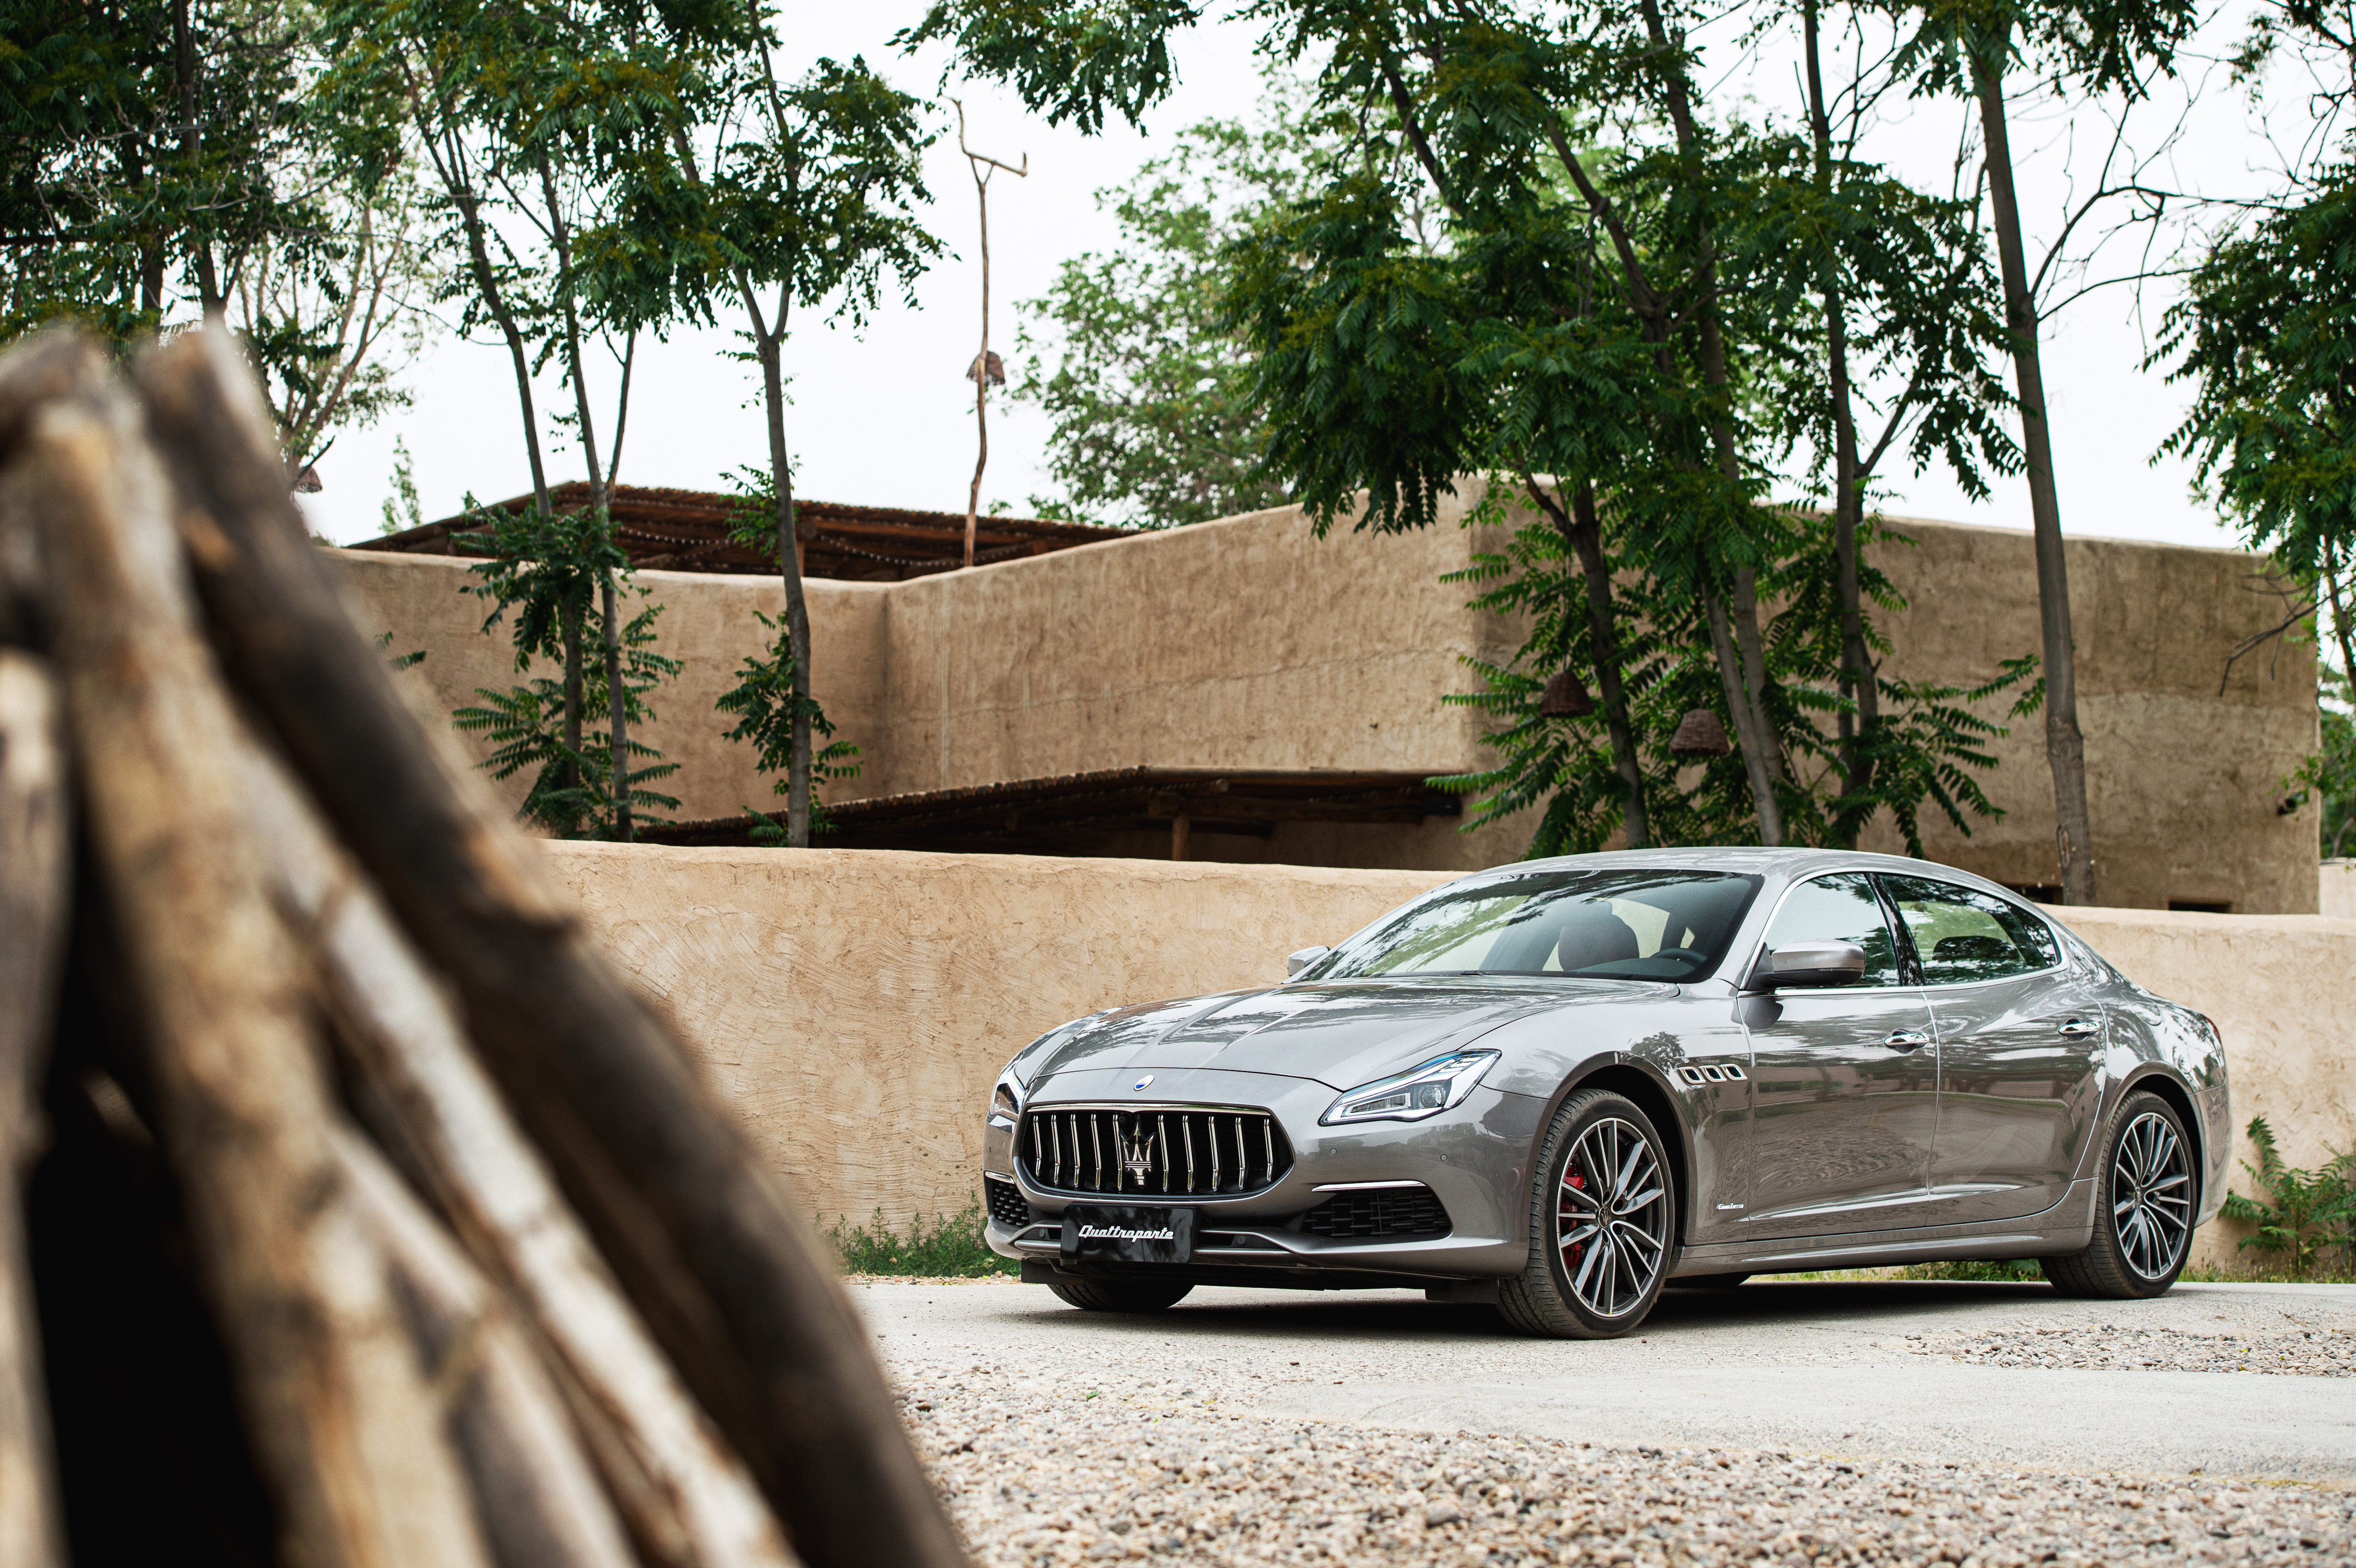 Descarga gratuita de fondo de pantalla para móvil de Maserati, Maserati Quattroporte, Vehículos.